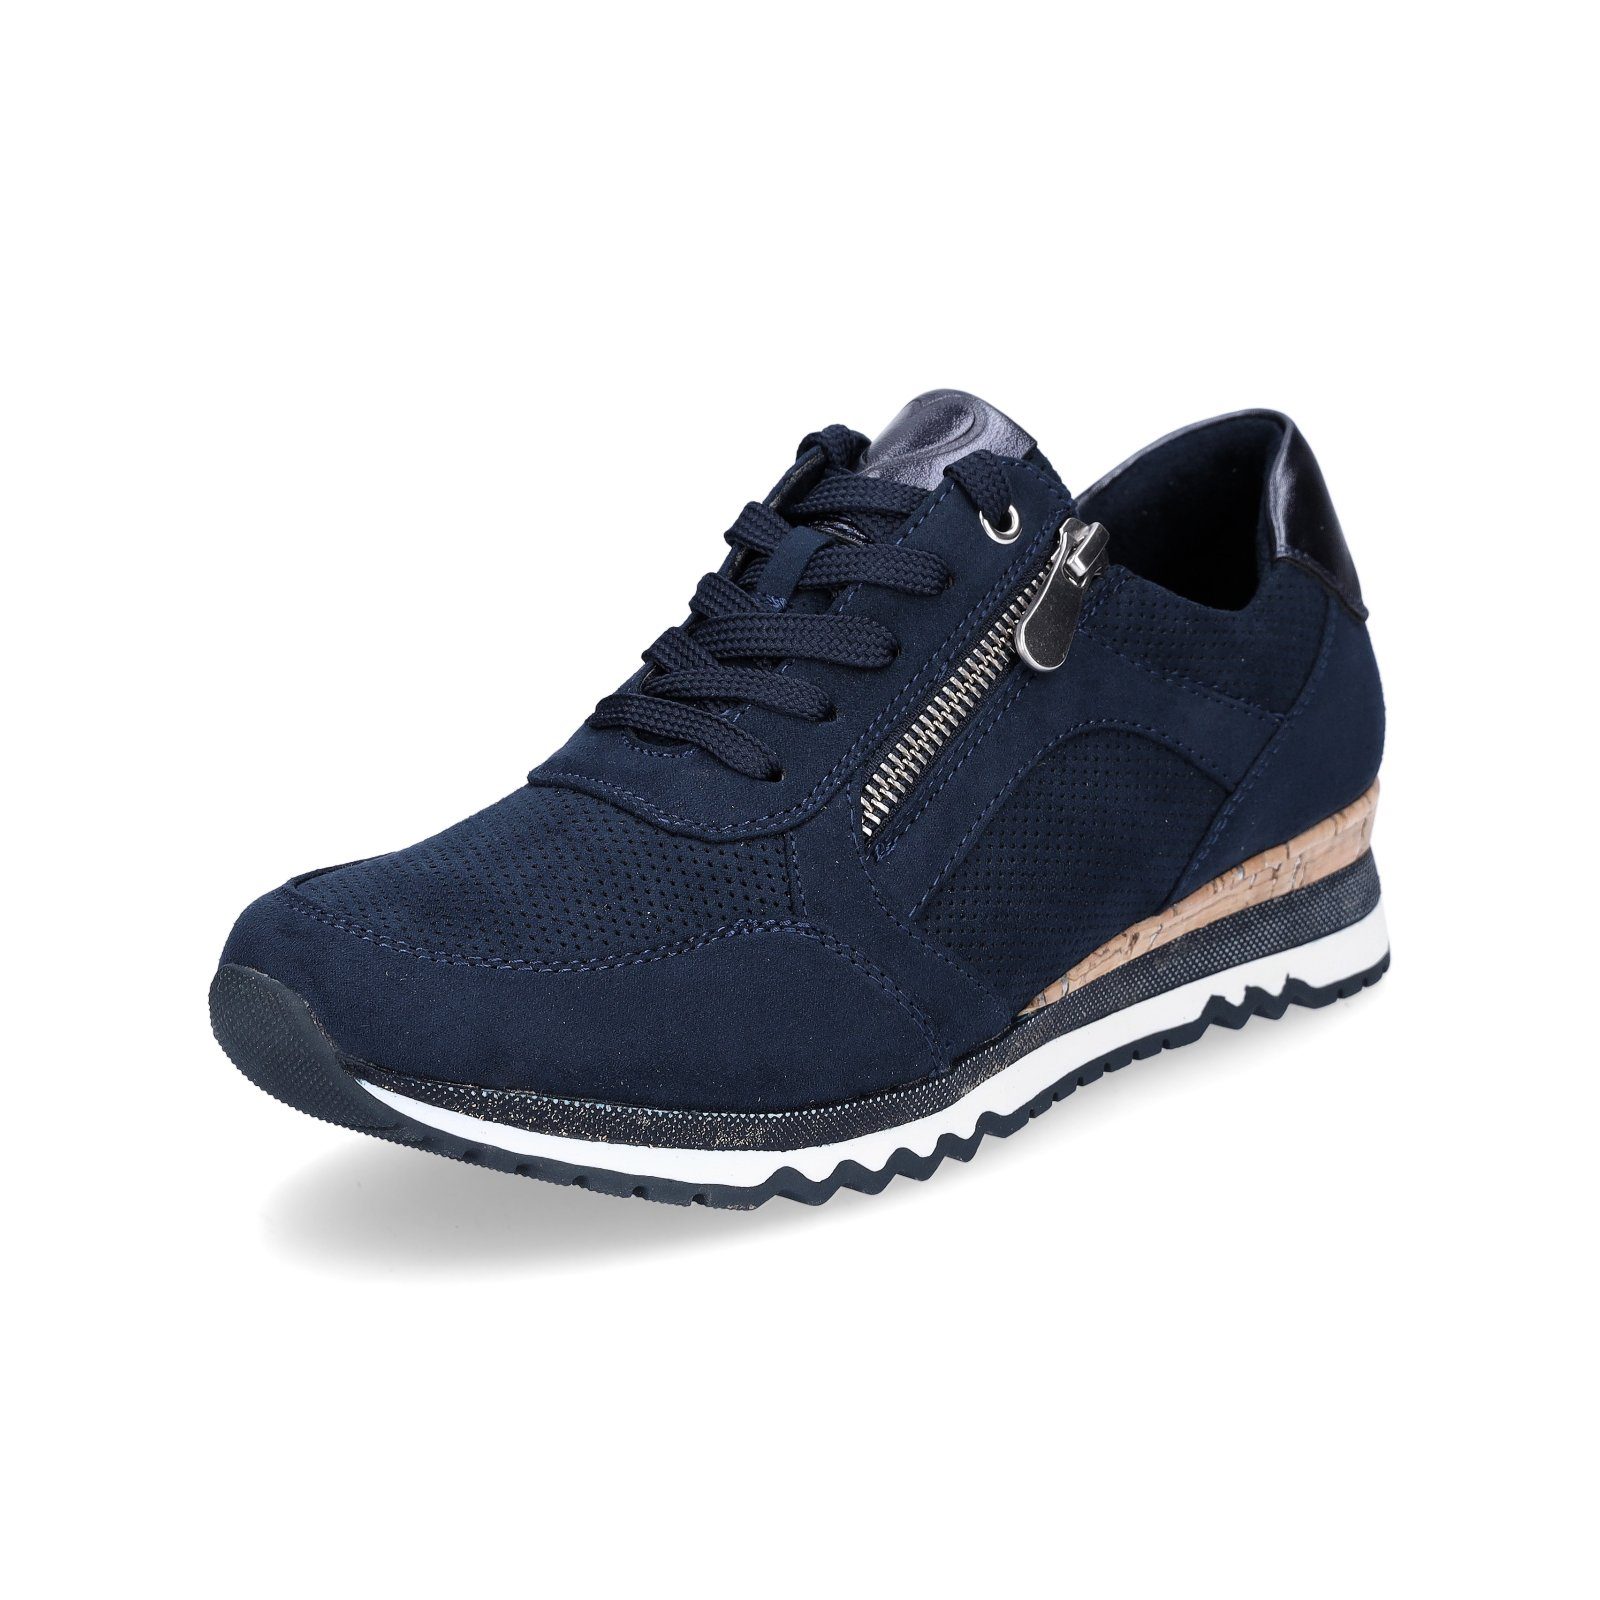 MARCO TOZZI Marco Tozzi Damen COMB NAVY blau navy Sneaker 890 Sneaker